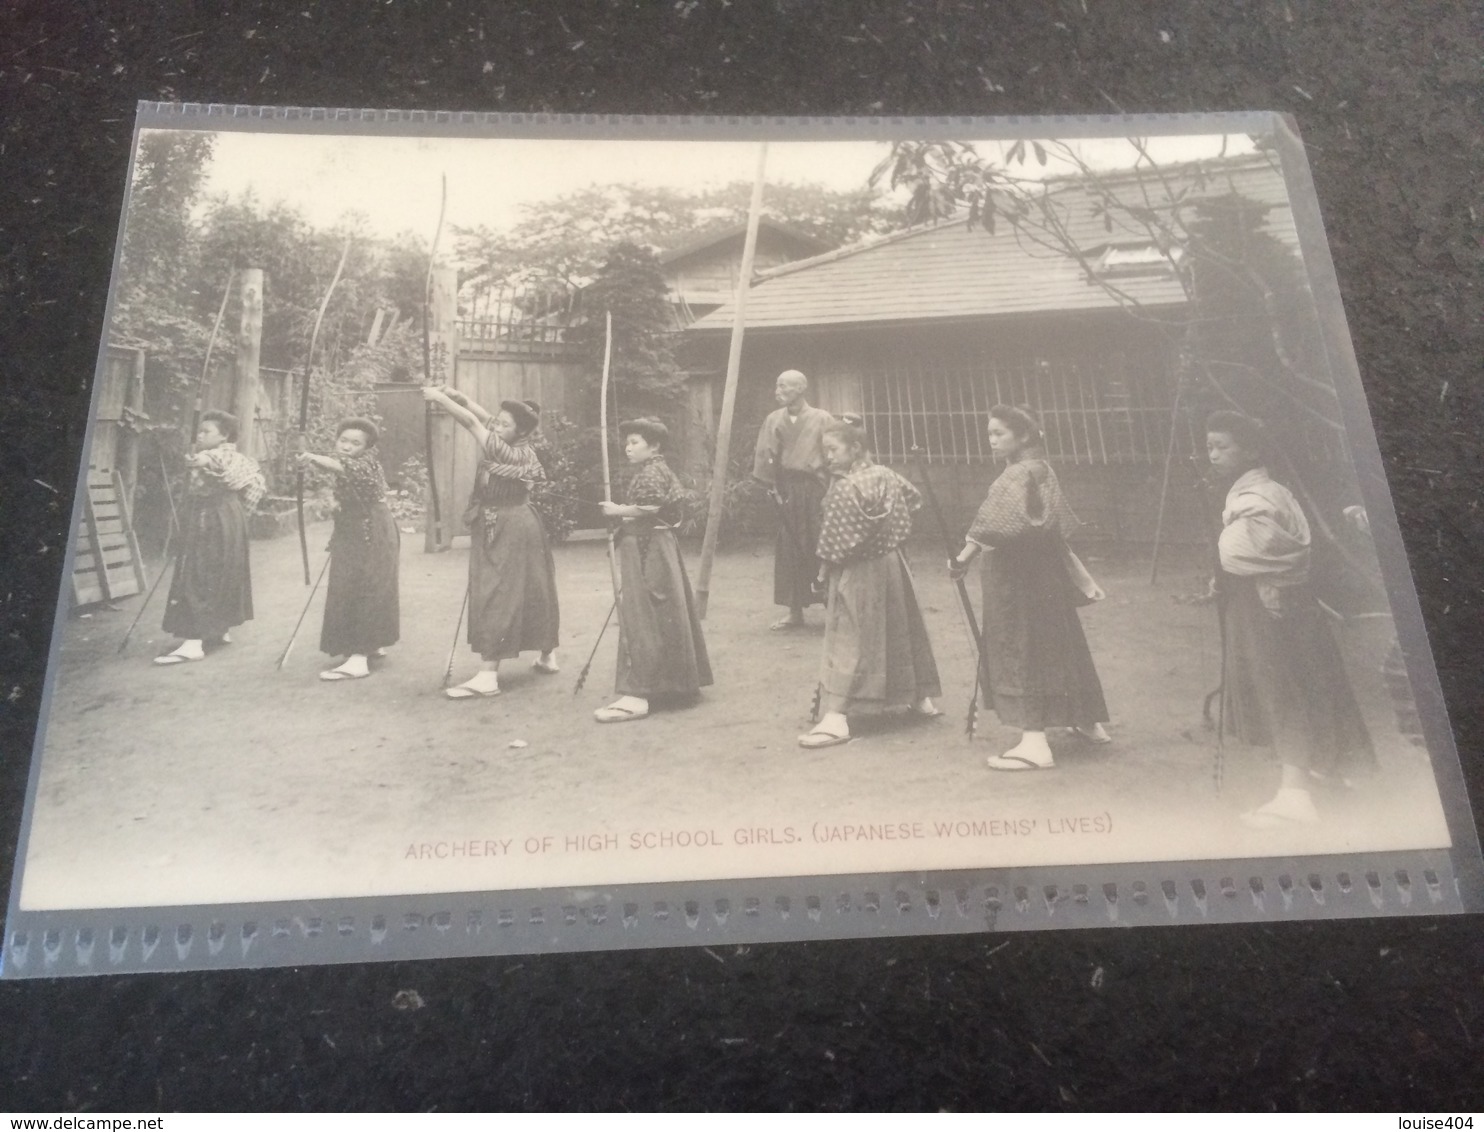 BR -1800 - ARCHERY OF HIGH SCHOOL GIRLS -JAPANES WOMEN' LIVES - Archery